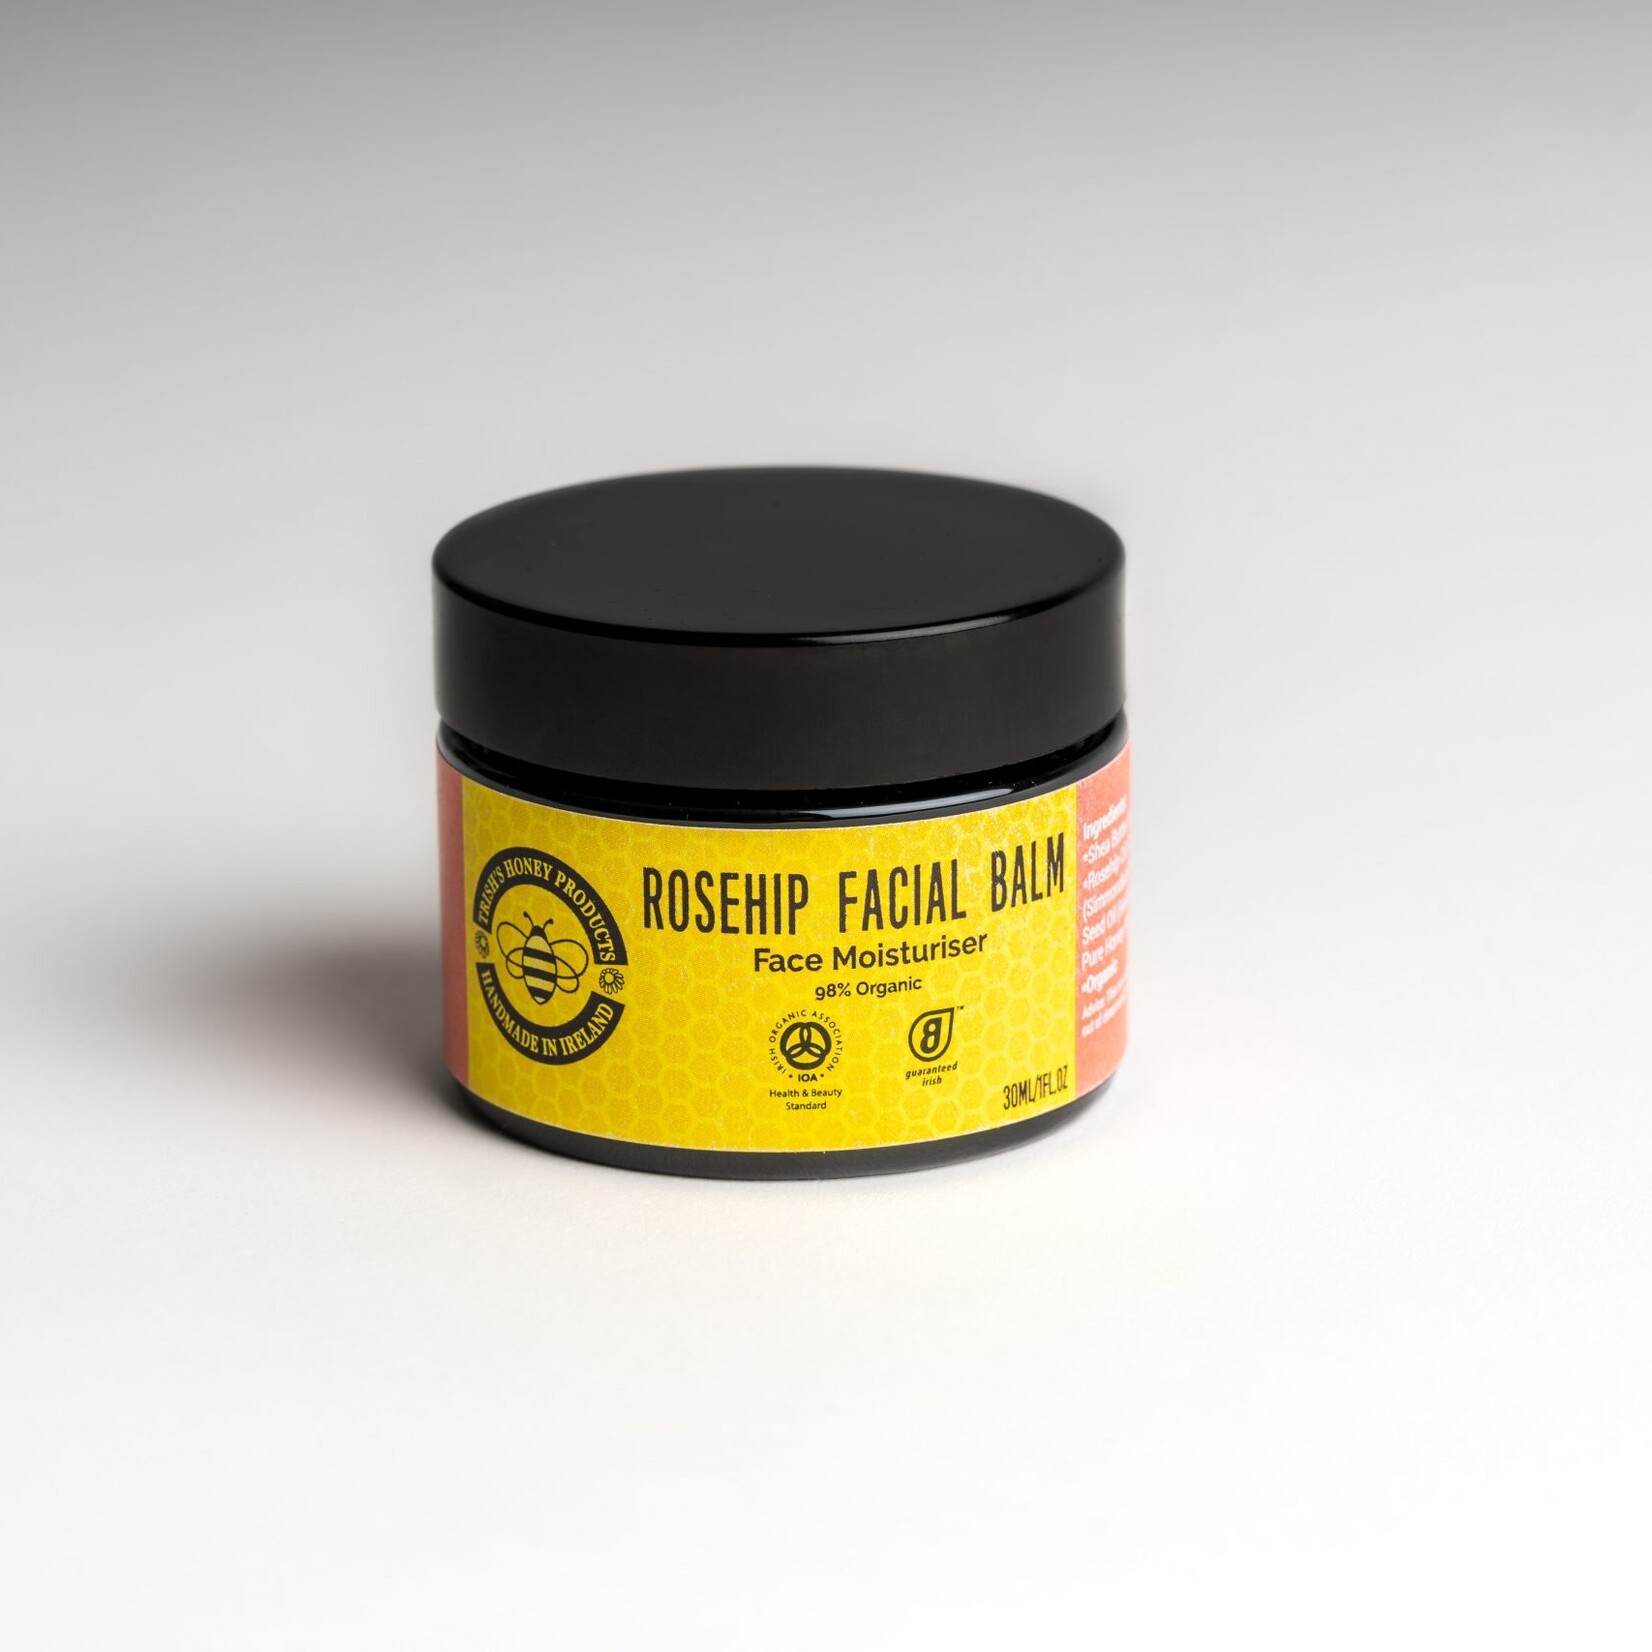 Trish's Honey Products Rosehip Facial Balm